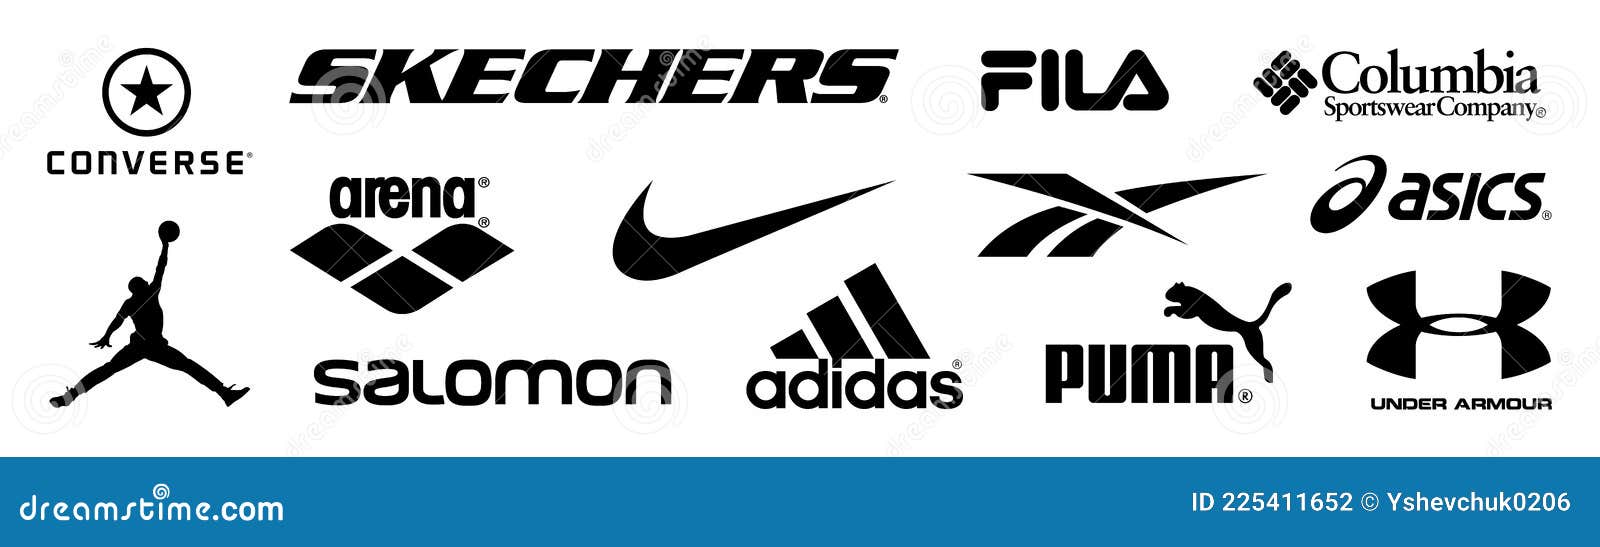 Adidas Nike Reebok Asics Jordan Puma Armor Fila Columbia Skechers Conversa Logos De Salomon Arena Logos De Deportes Fotografía editorial - de icono, forma: 225411652